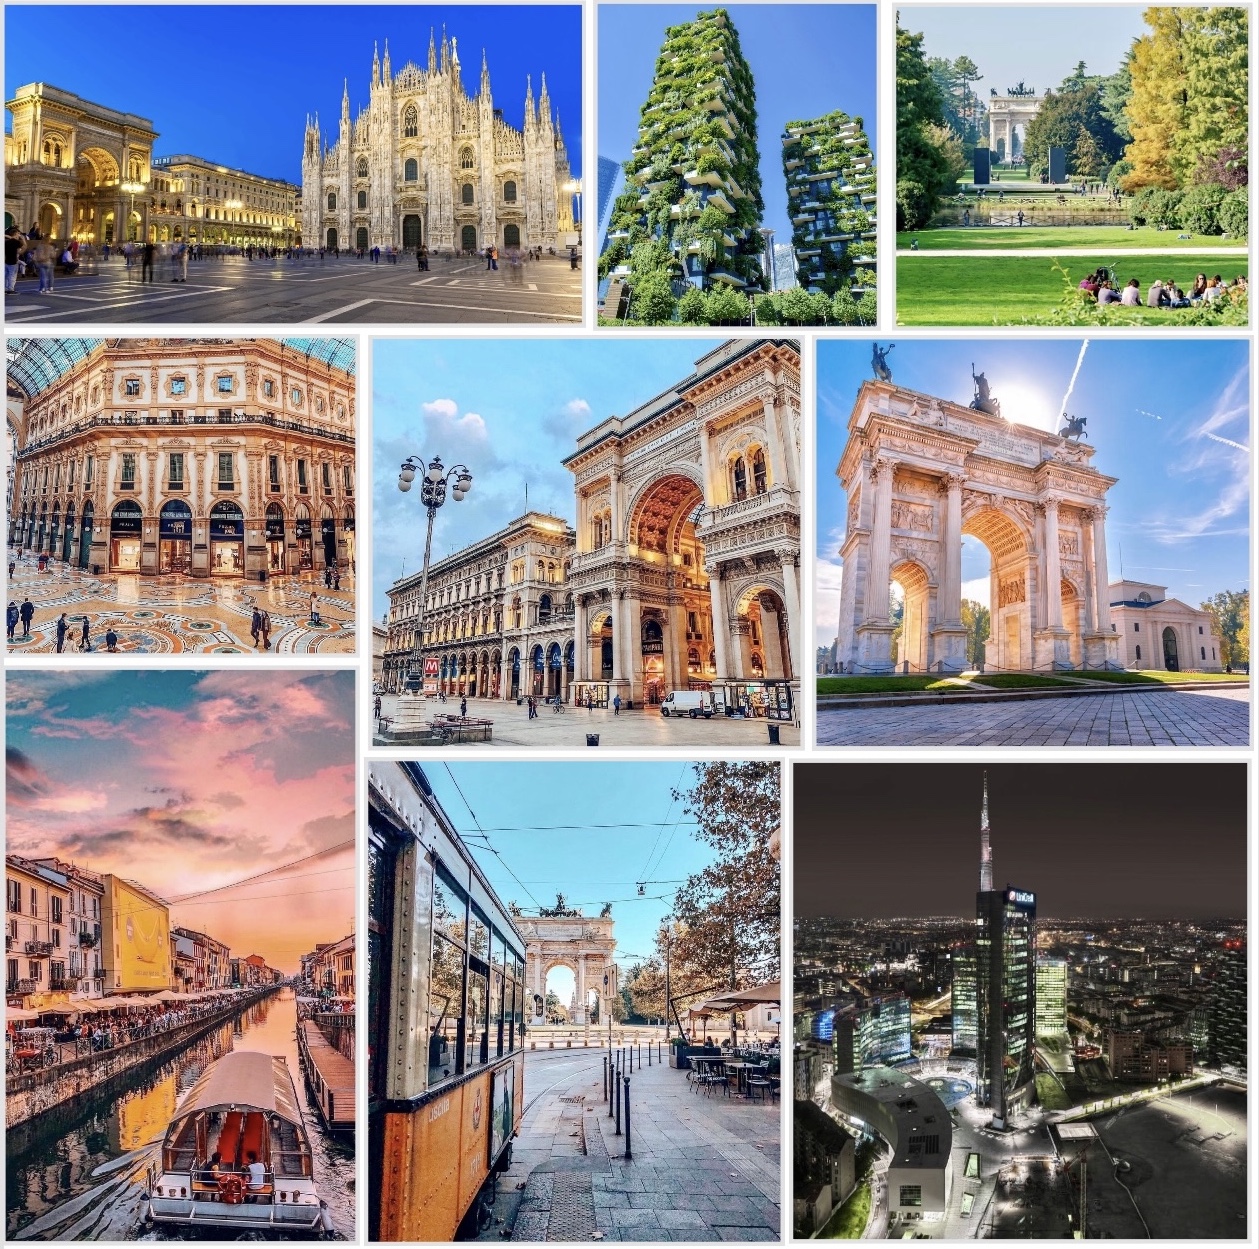 Why We Love Milan: By Bellish